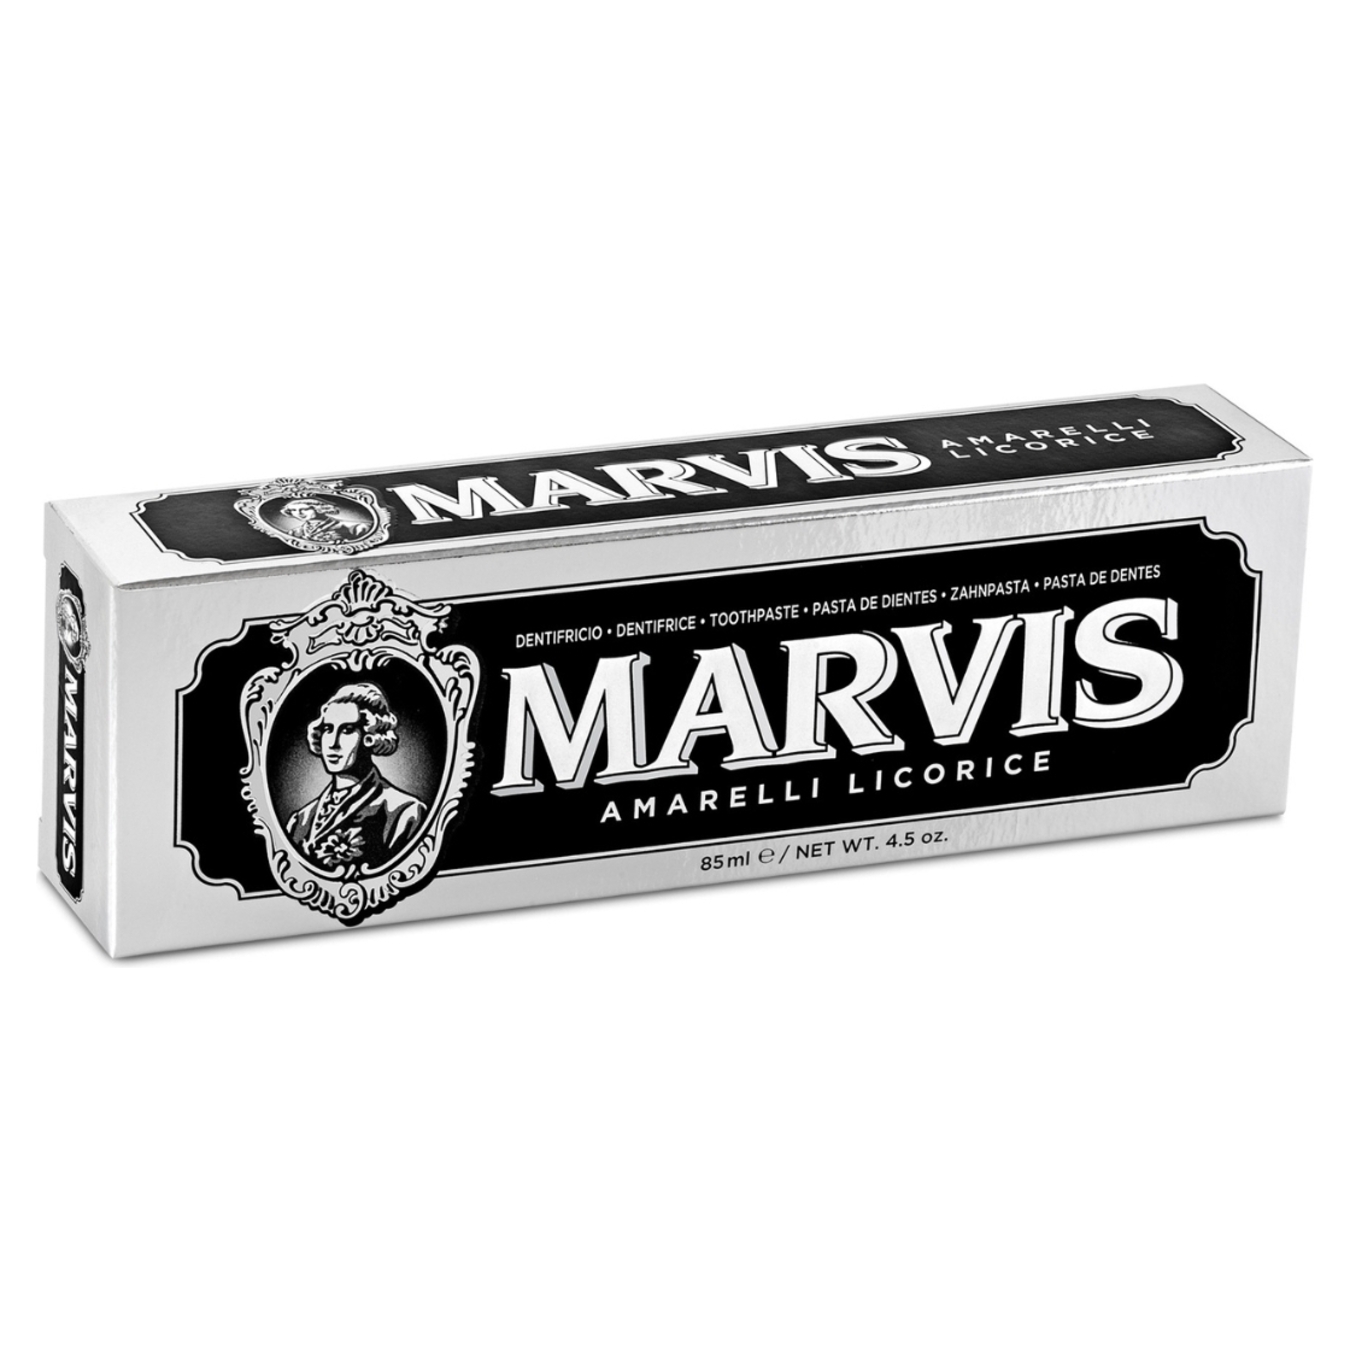 Marvis amarelli licorice toothpaste 85 ml 3